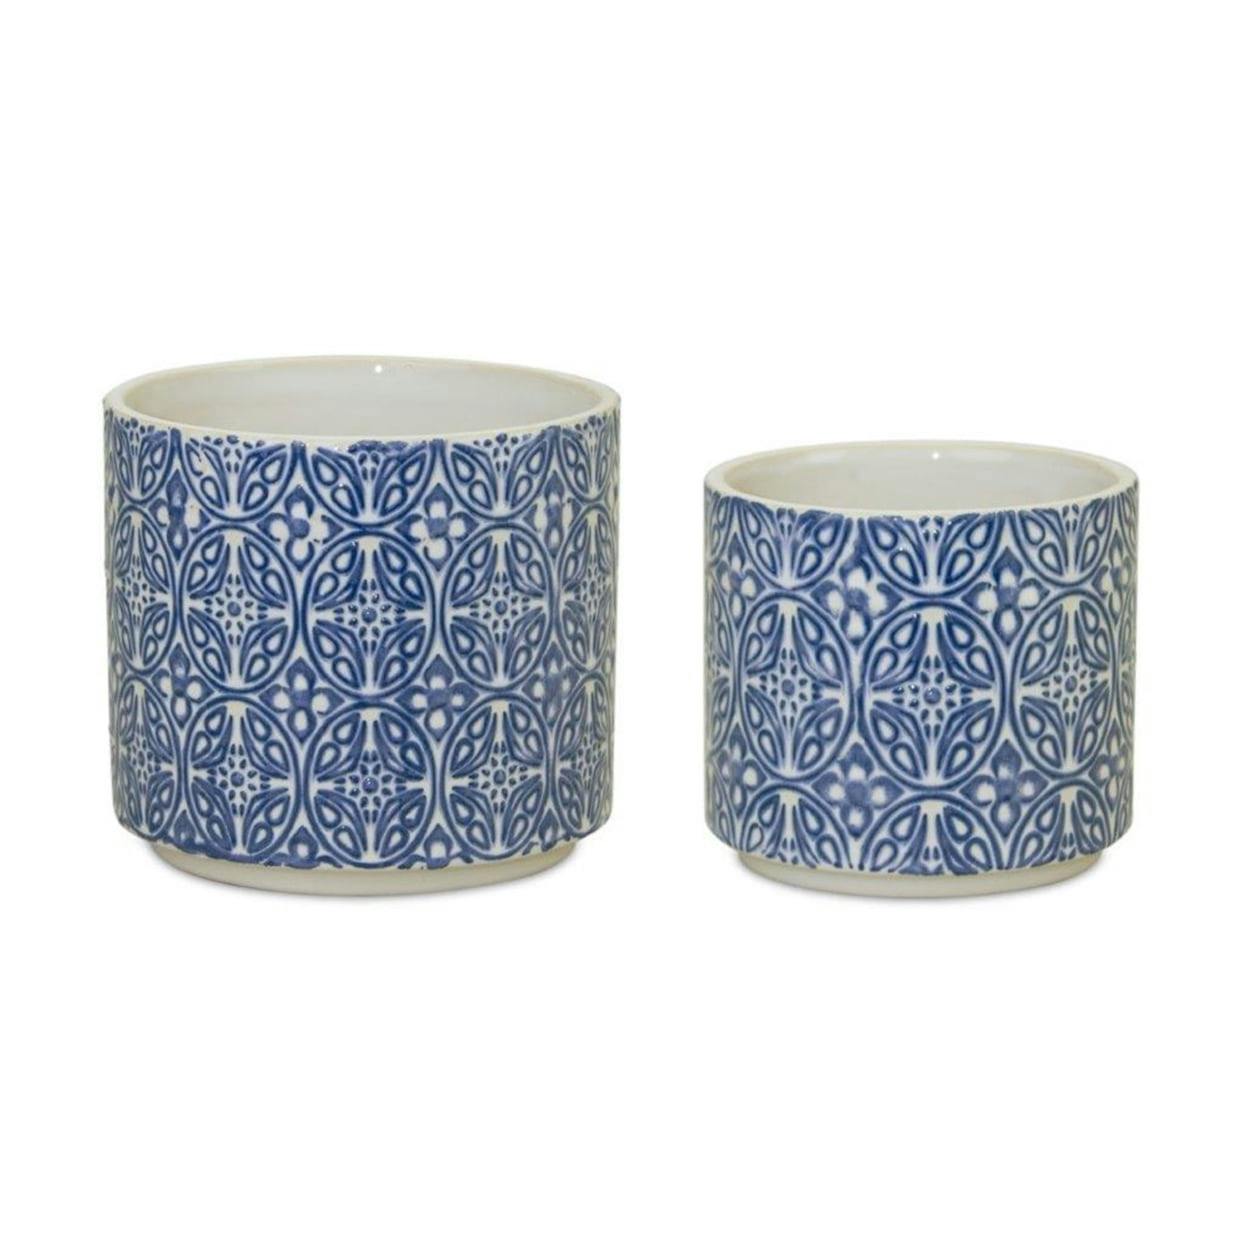 Geometric Blue and White Glazed Ceramic Pots (Set of 2)